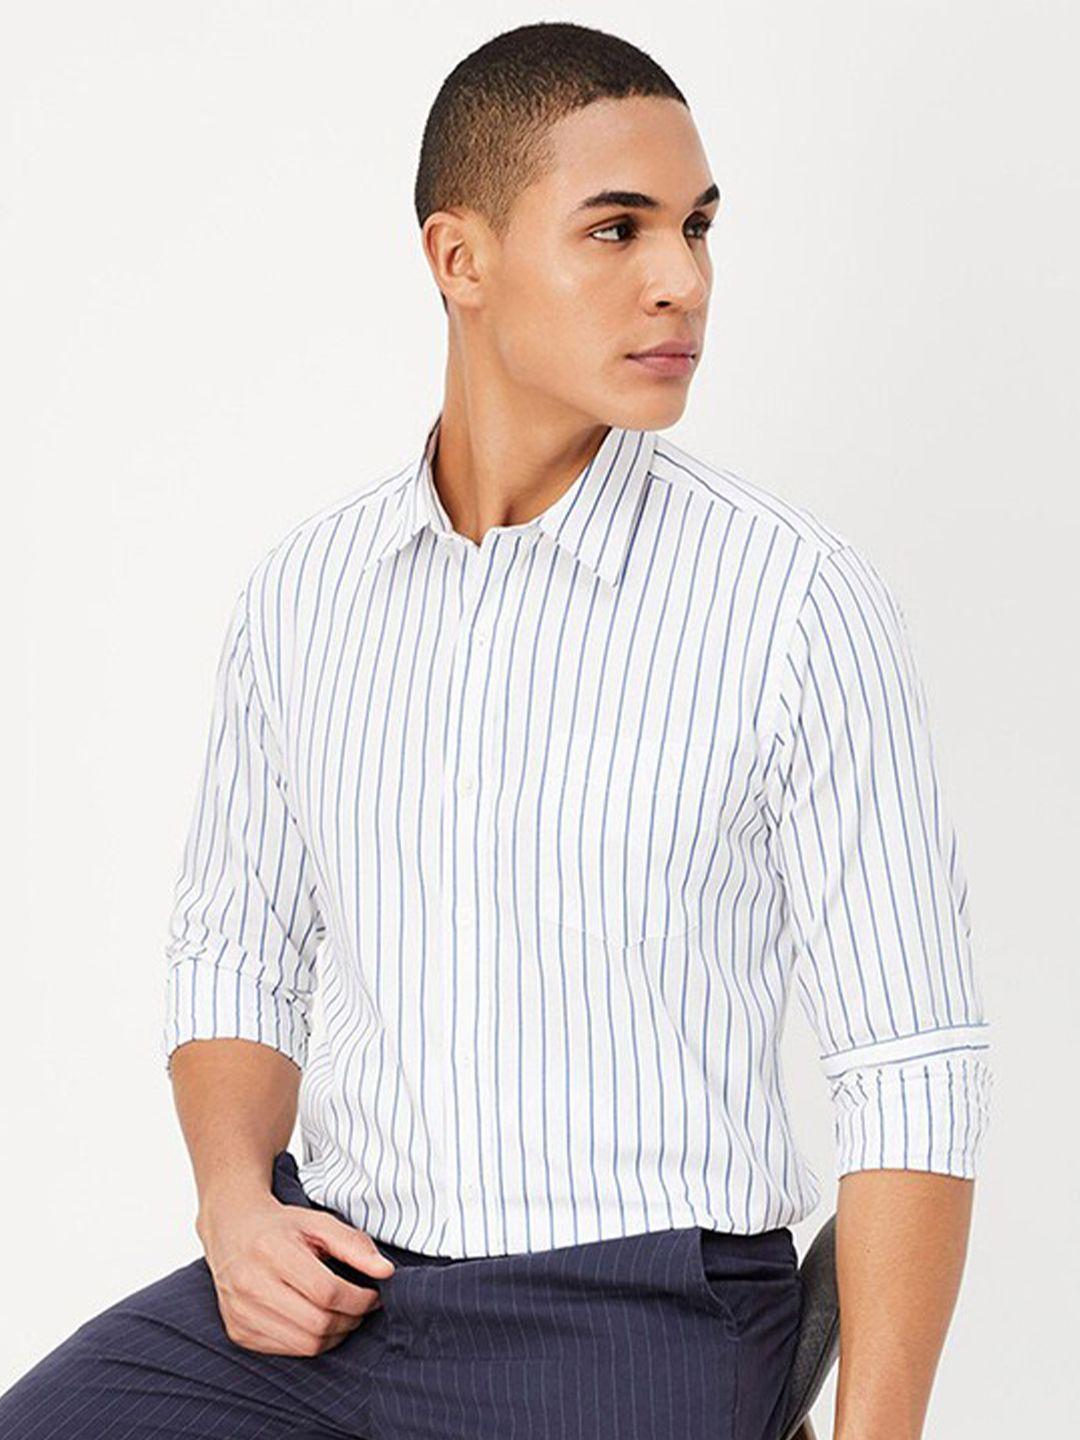 max men opaque striped casual shirt